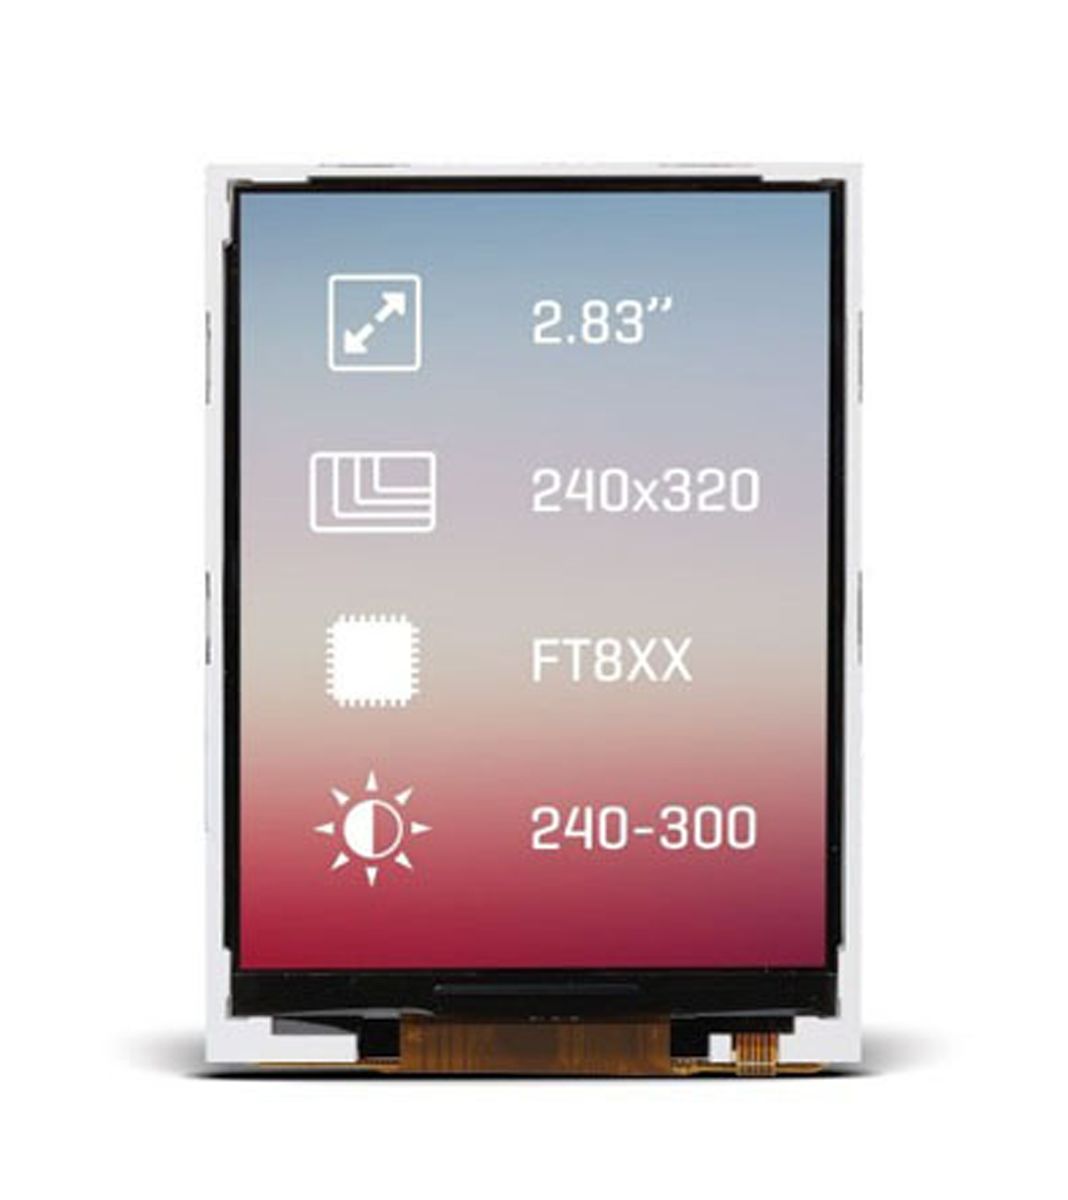 MikroElektronika MIKROE-2156 TFT LCD Colour Display, 2.83in, 240 x 320pixels